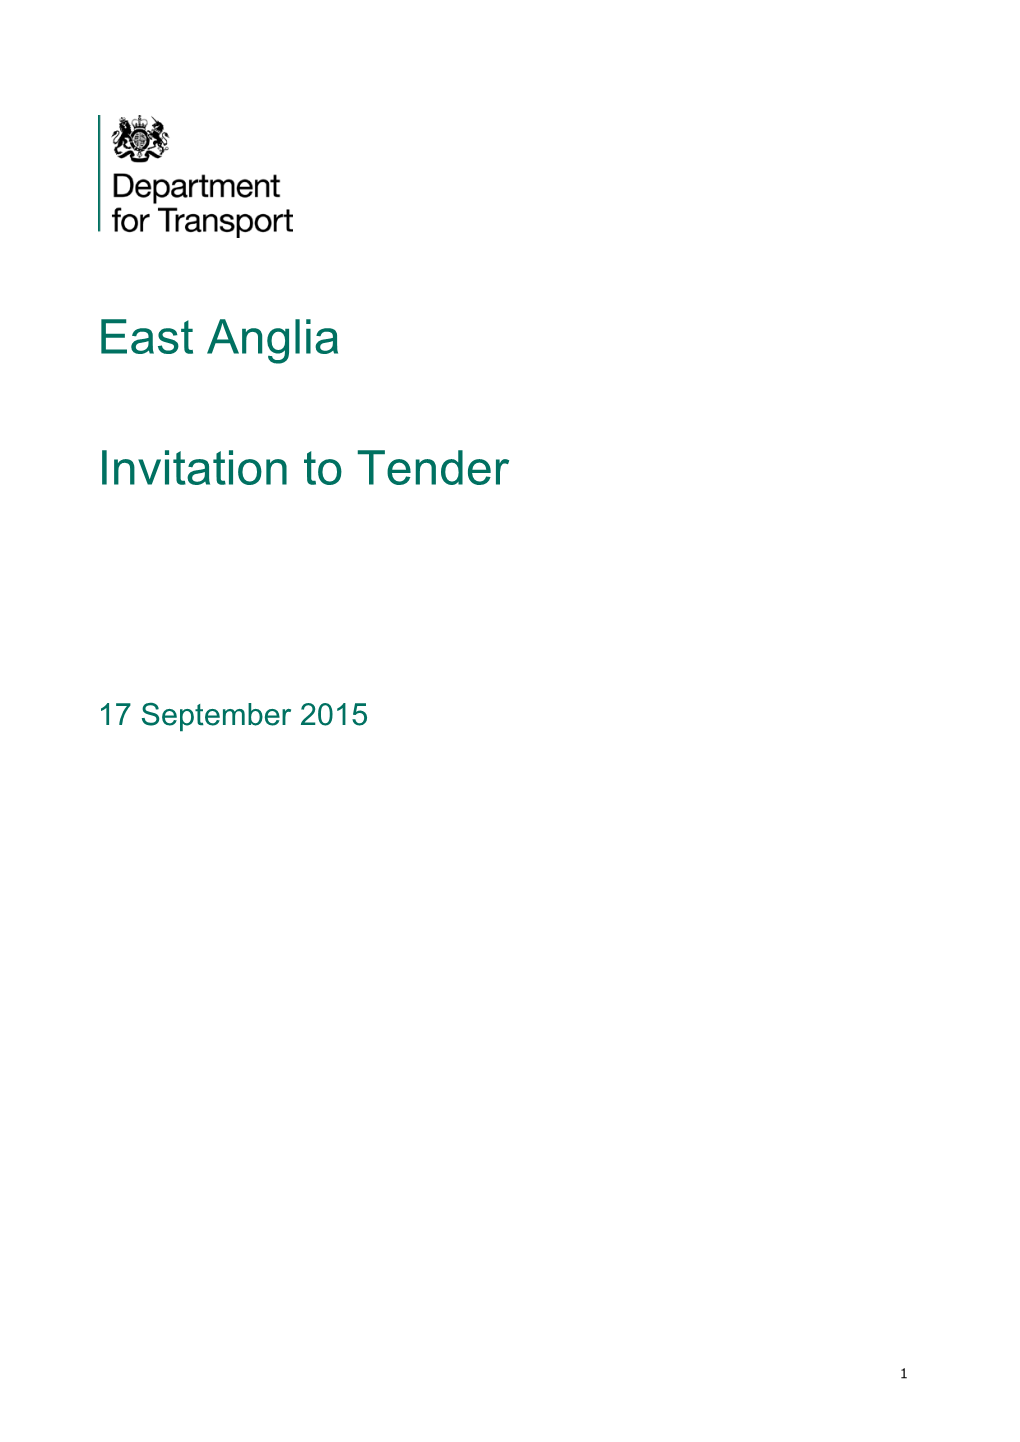 East Anglia Invitation to Tender